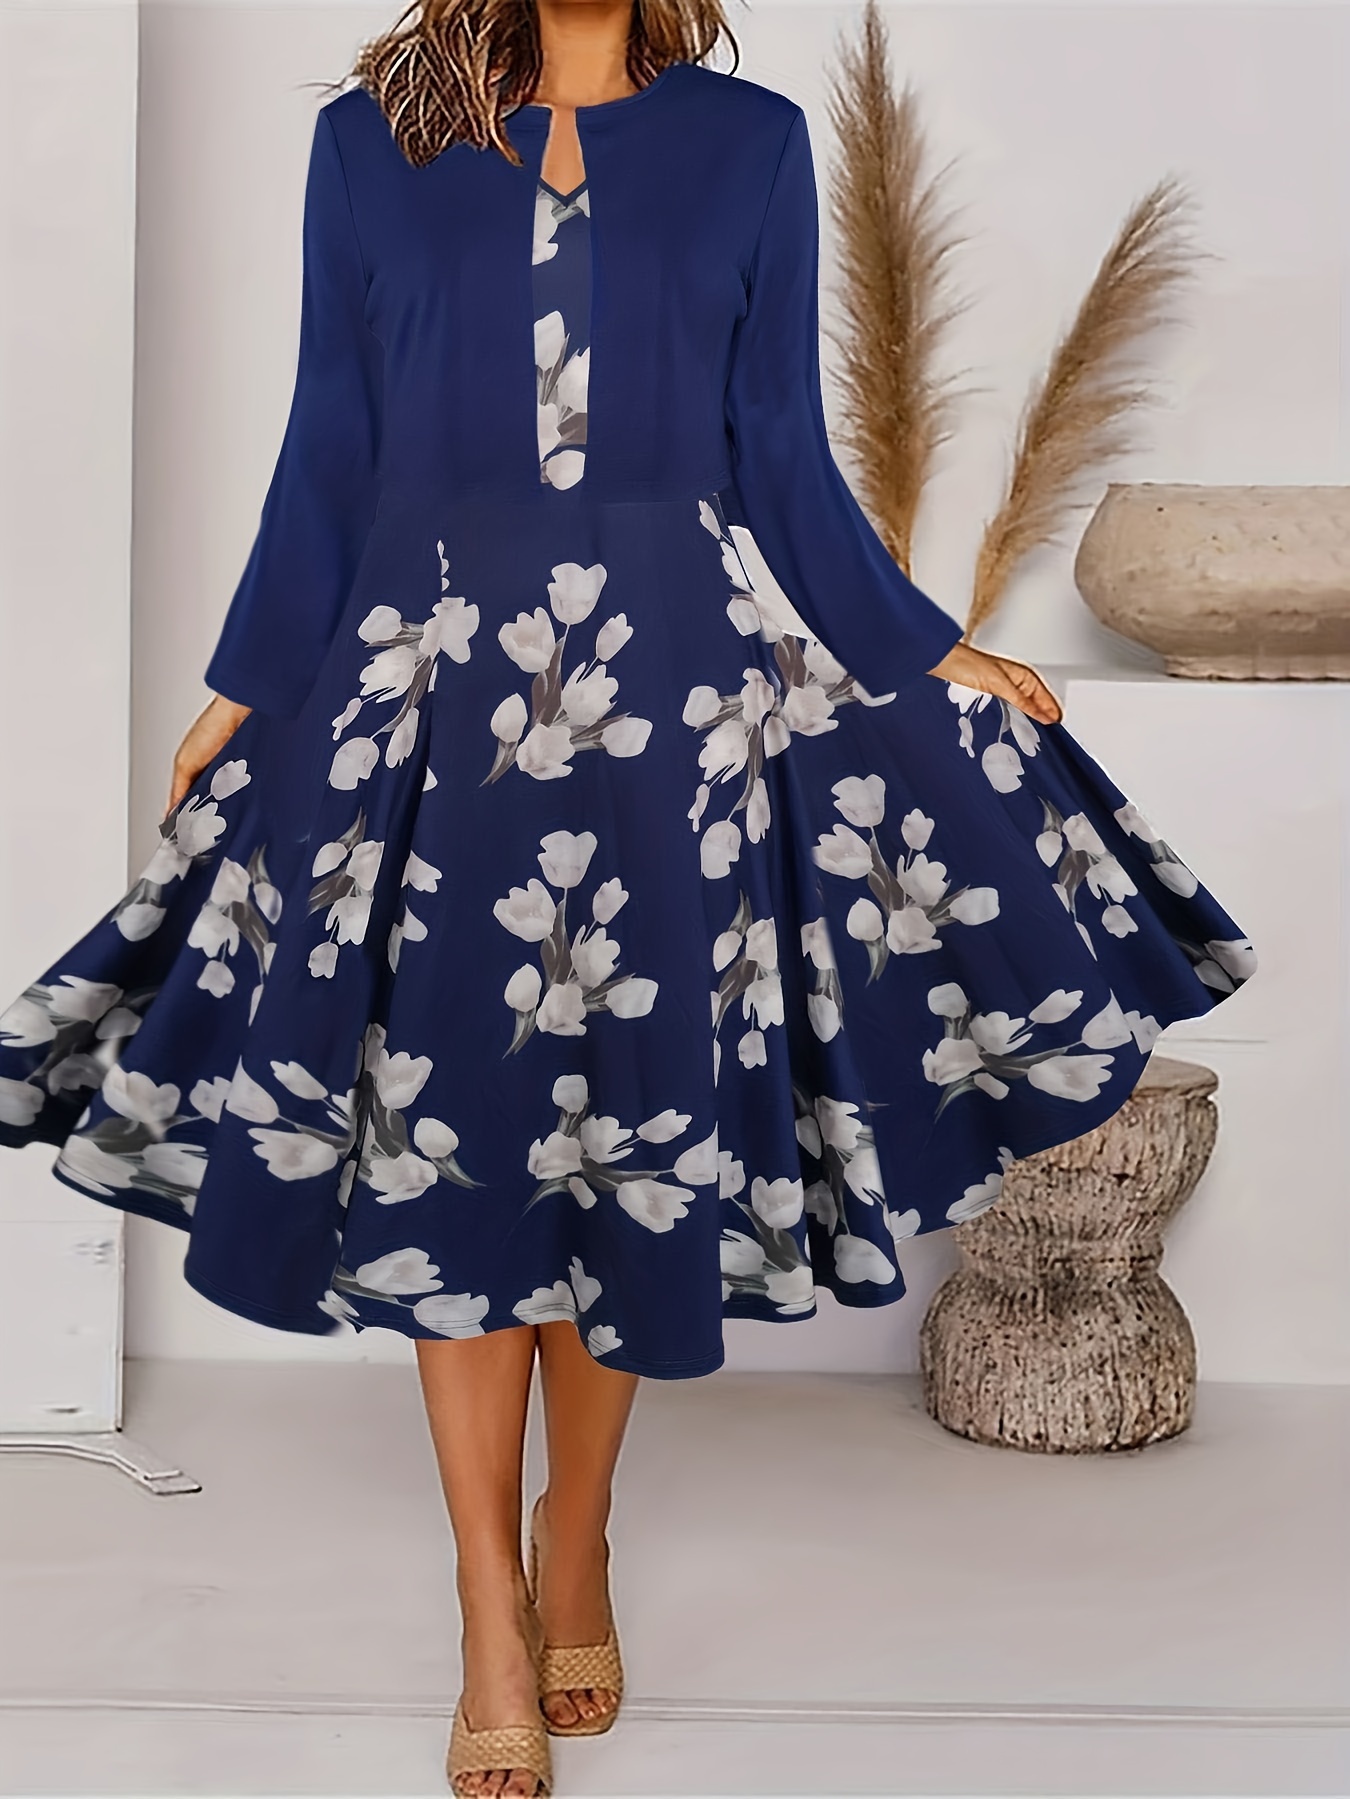 Floral Jacket Outfit Dress, Floral Dress Cardigan Set